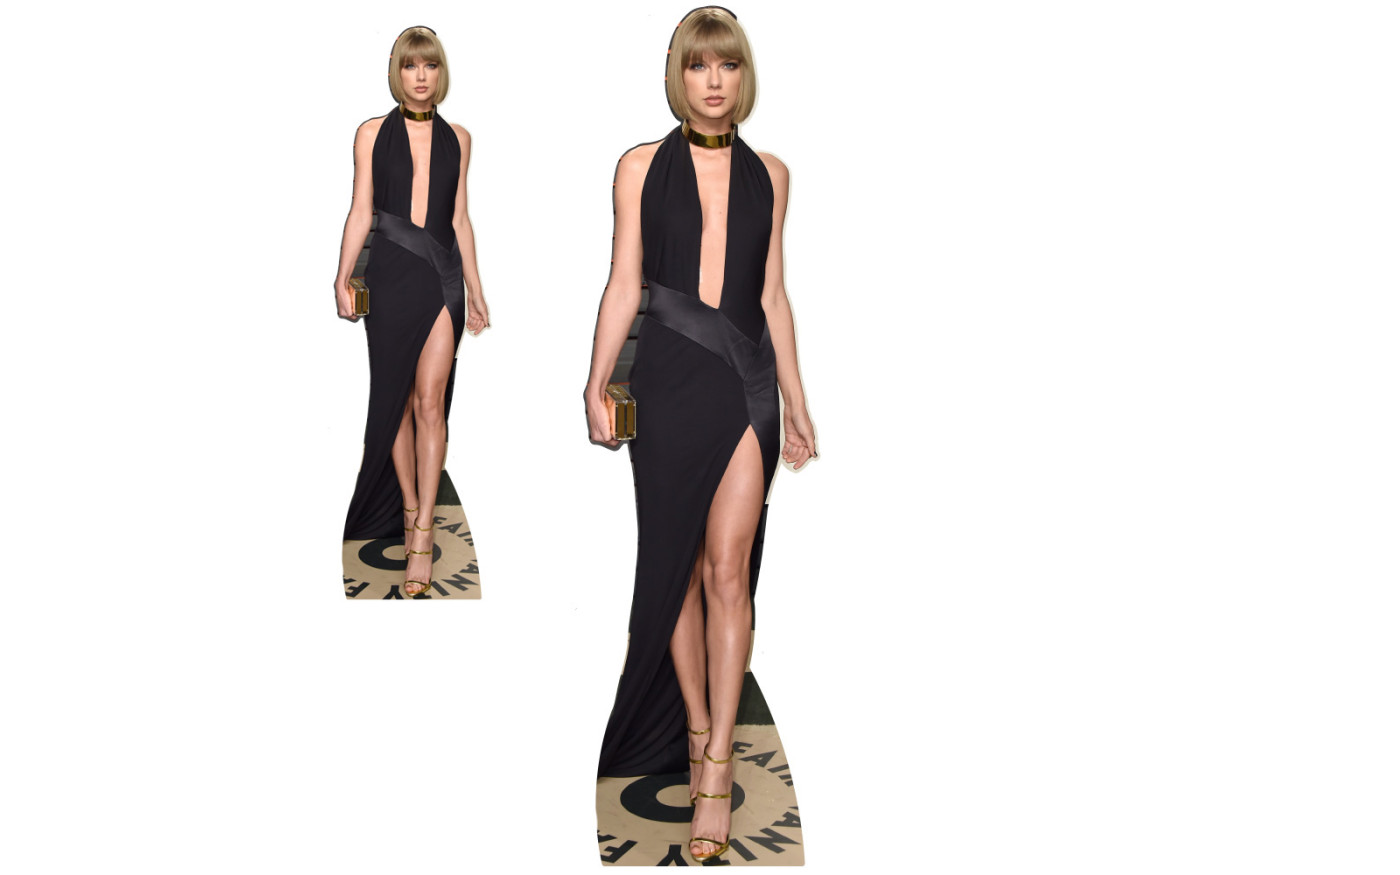 Taylor Swift, Other, Taylor Swift Cardboard Cutout Not Lifesized